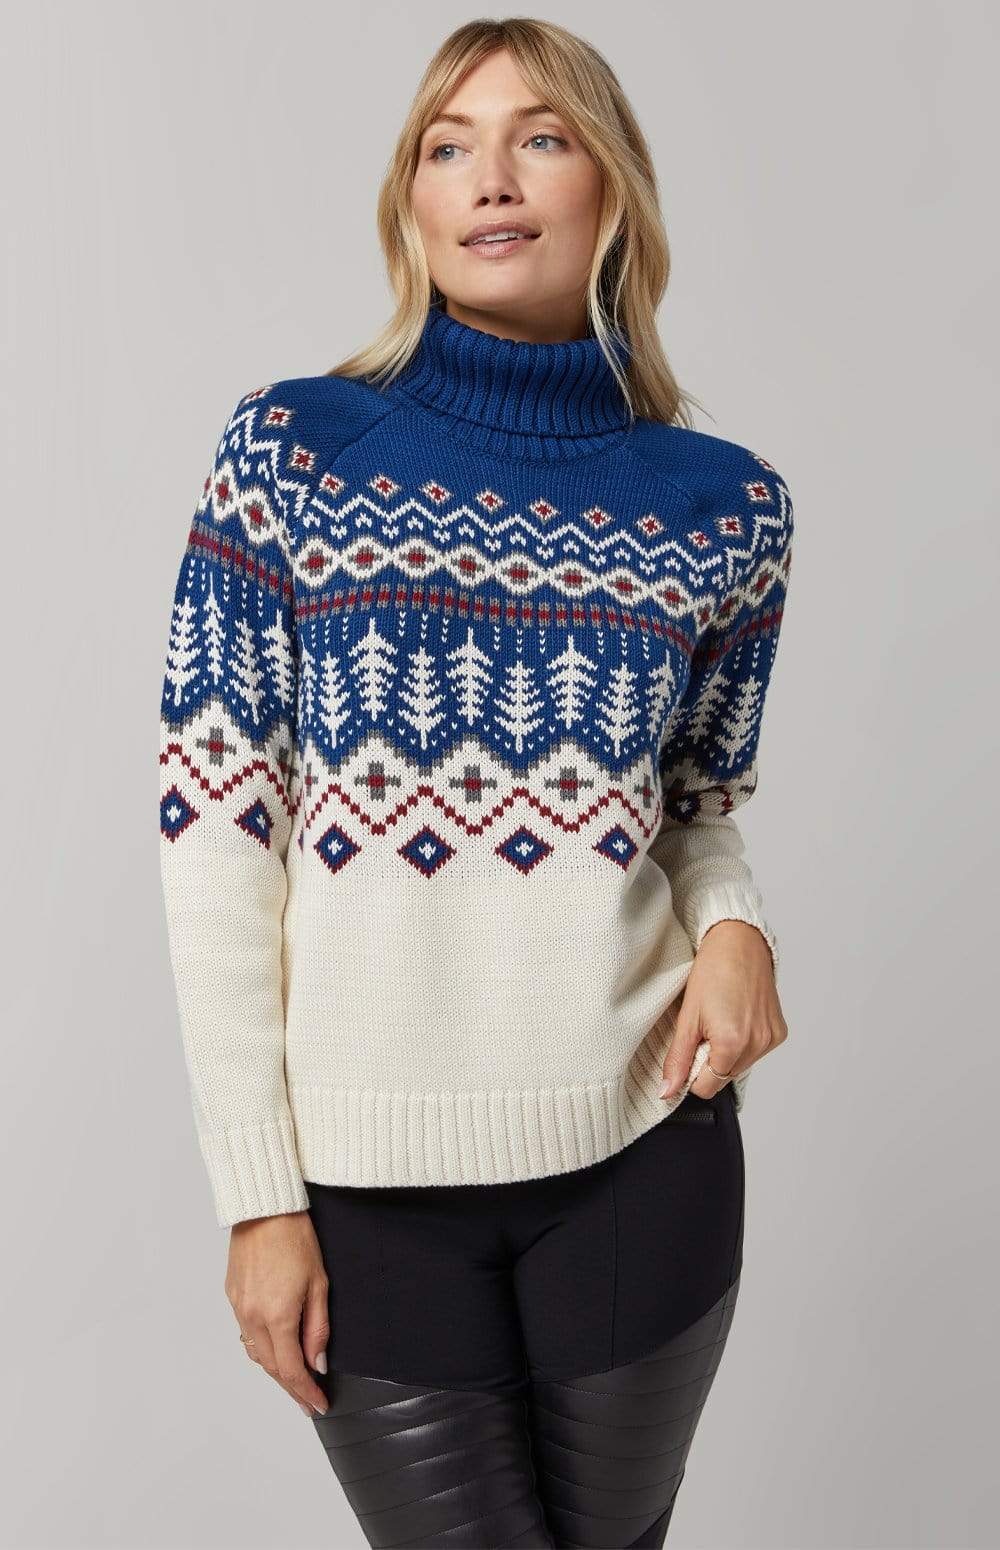 Alp-n-Rock Womens Sweater Logan Fair Isle Sweater